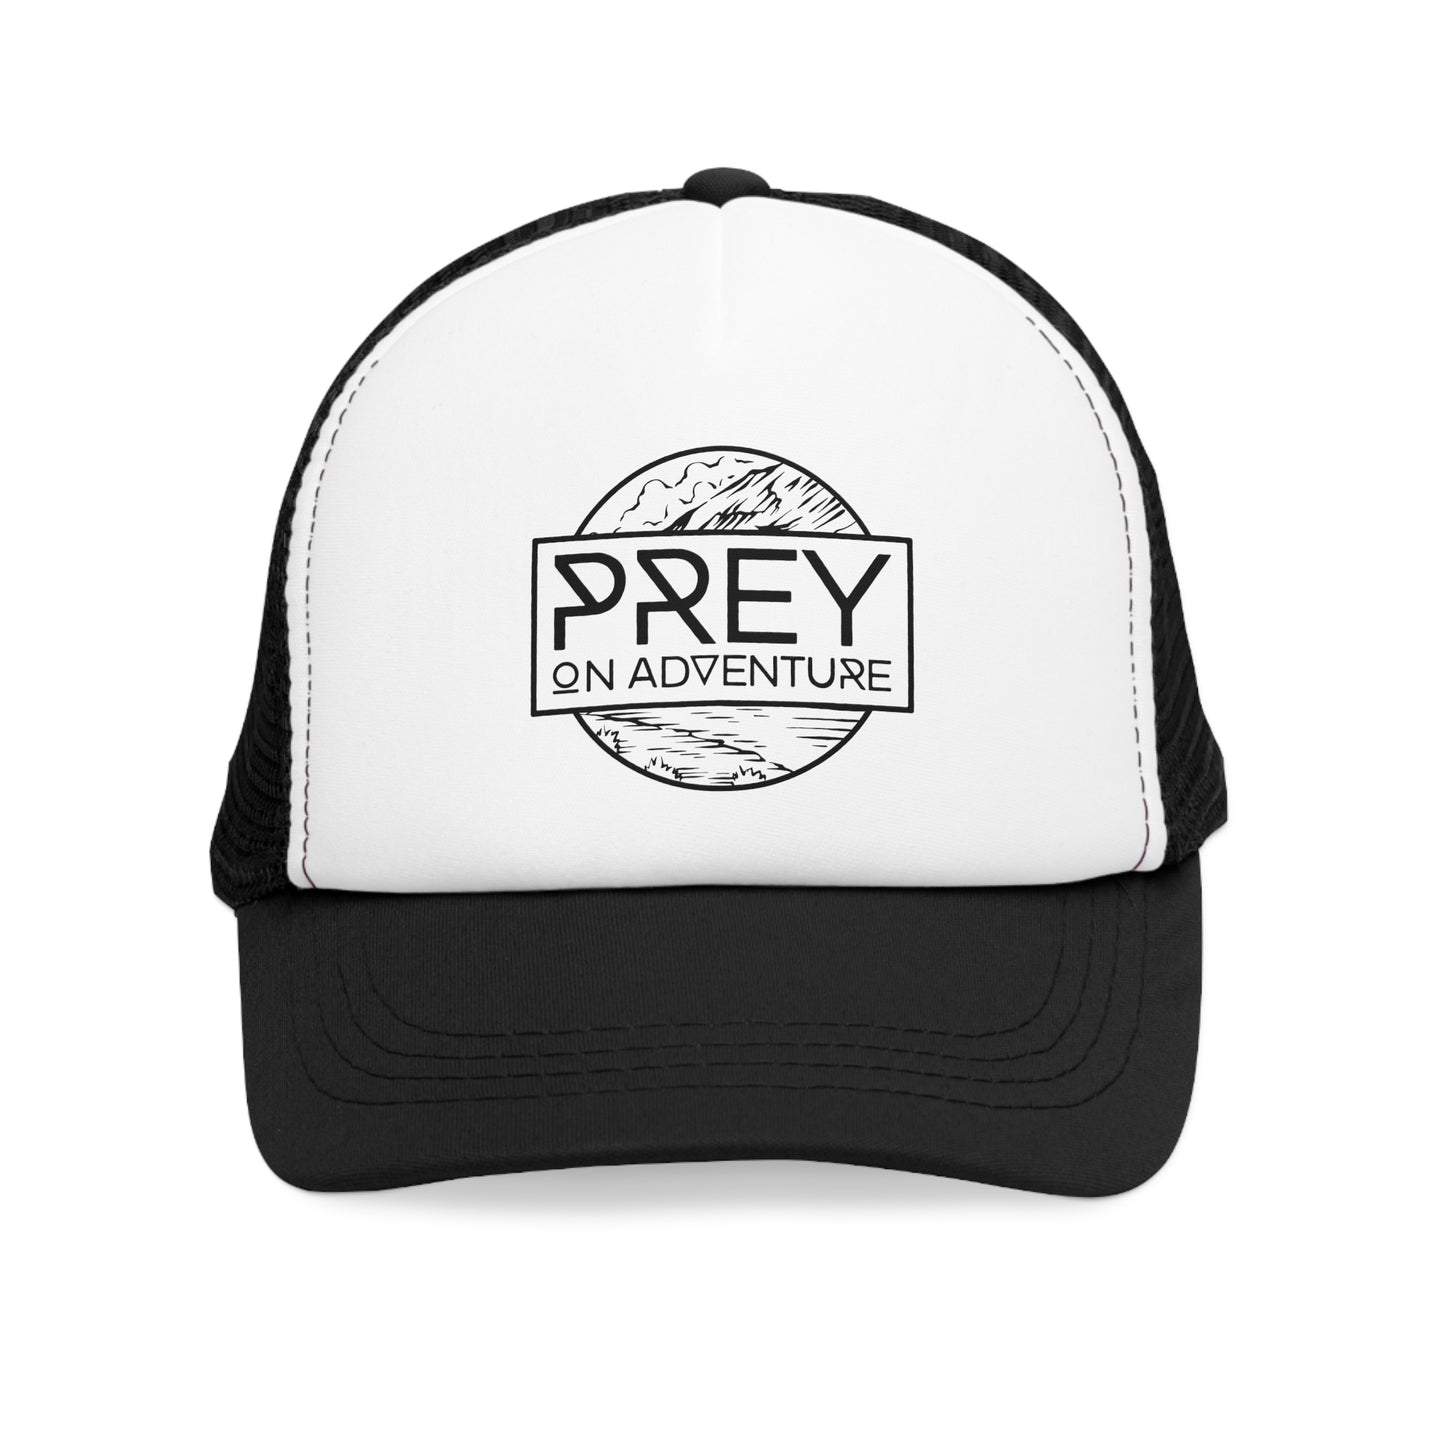 Prey On Adventure Mesh Hat